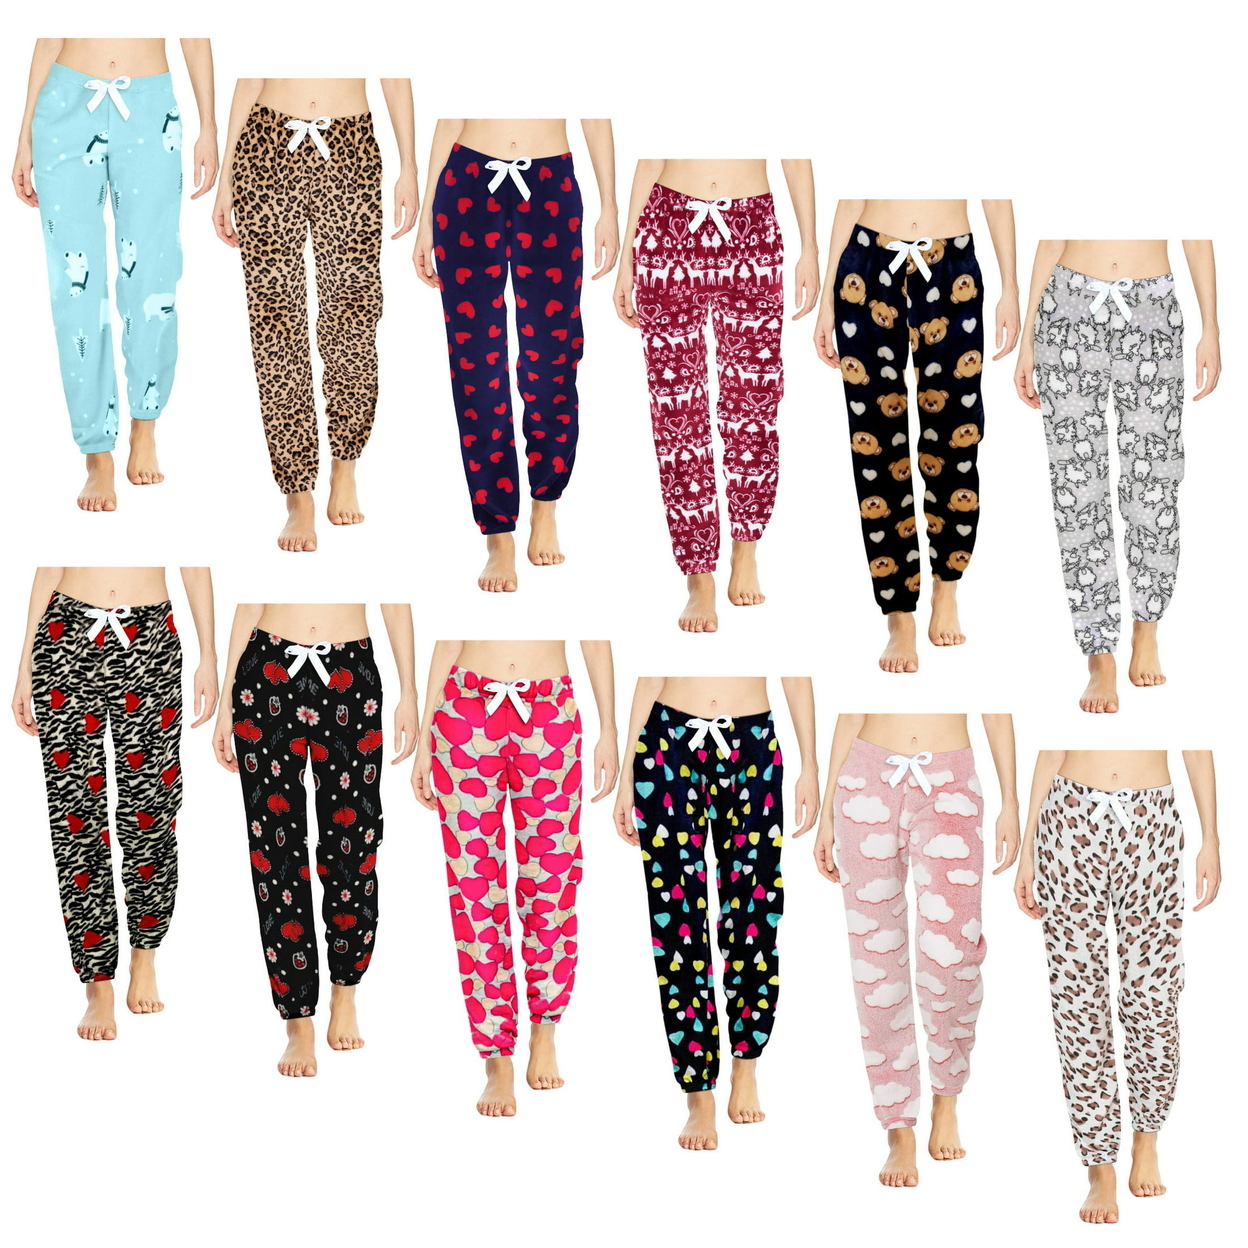 3-Pack: Women's Printed Ultra-Soft Comfy Stretch Micro-Fleece Pajama Lounge Pants - Medium, Animal